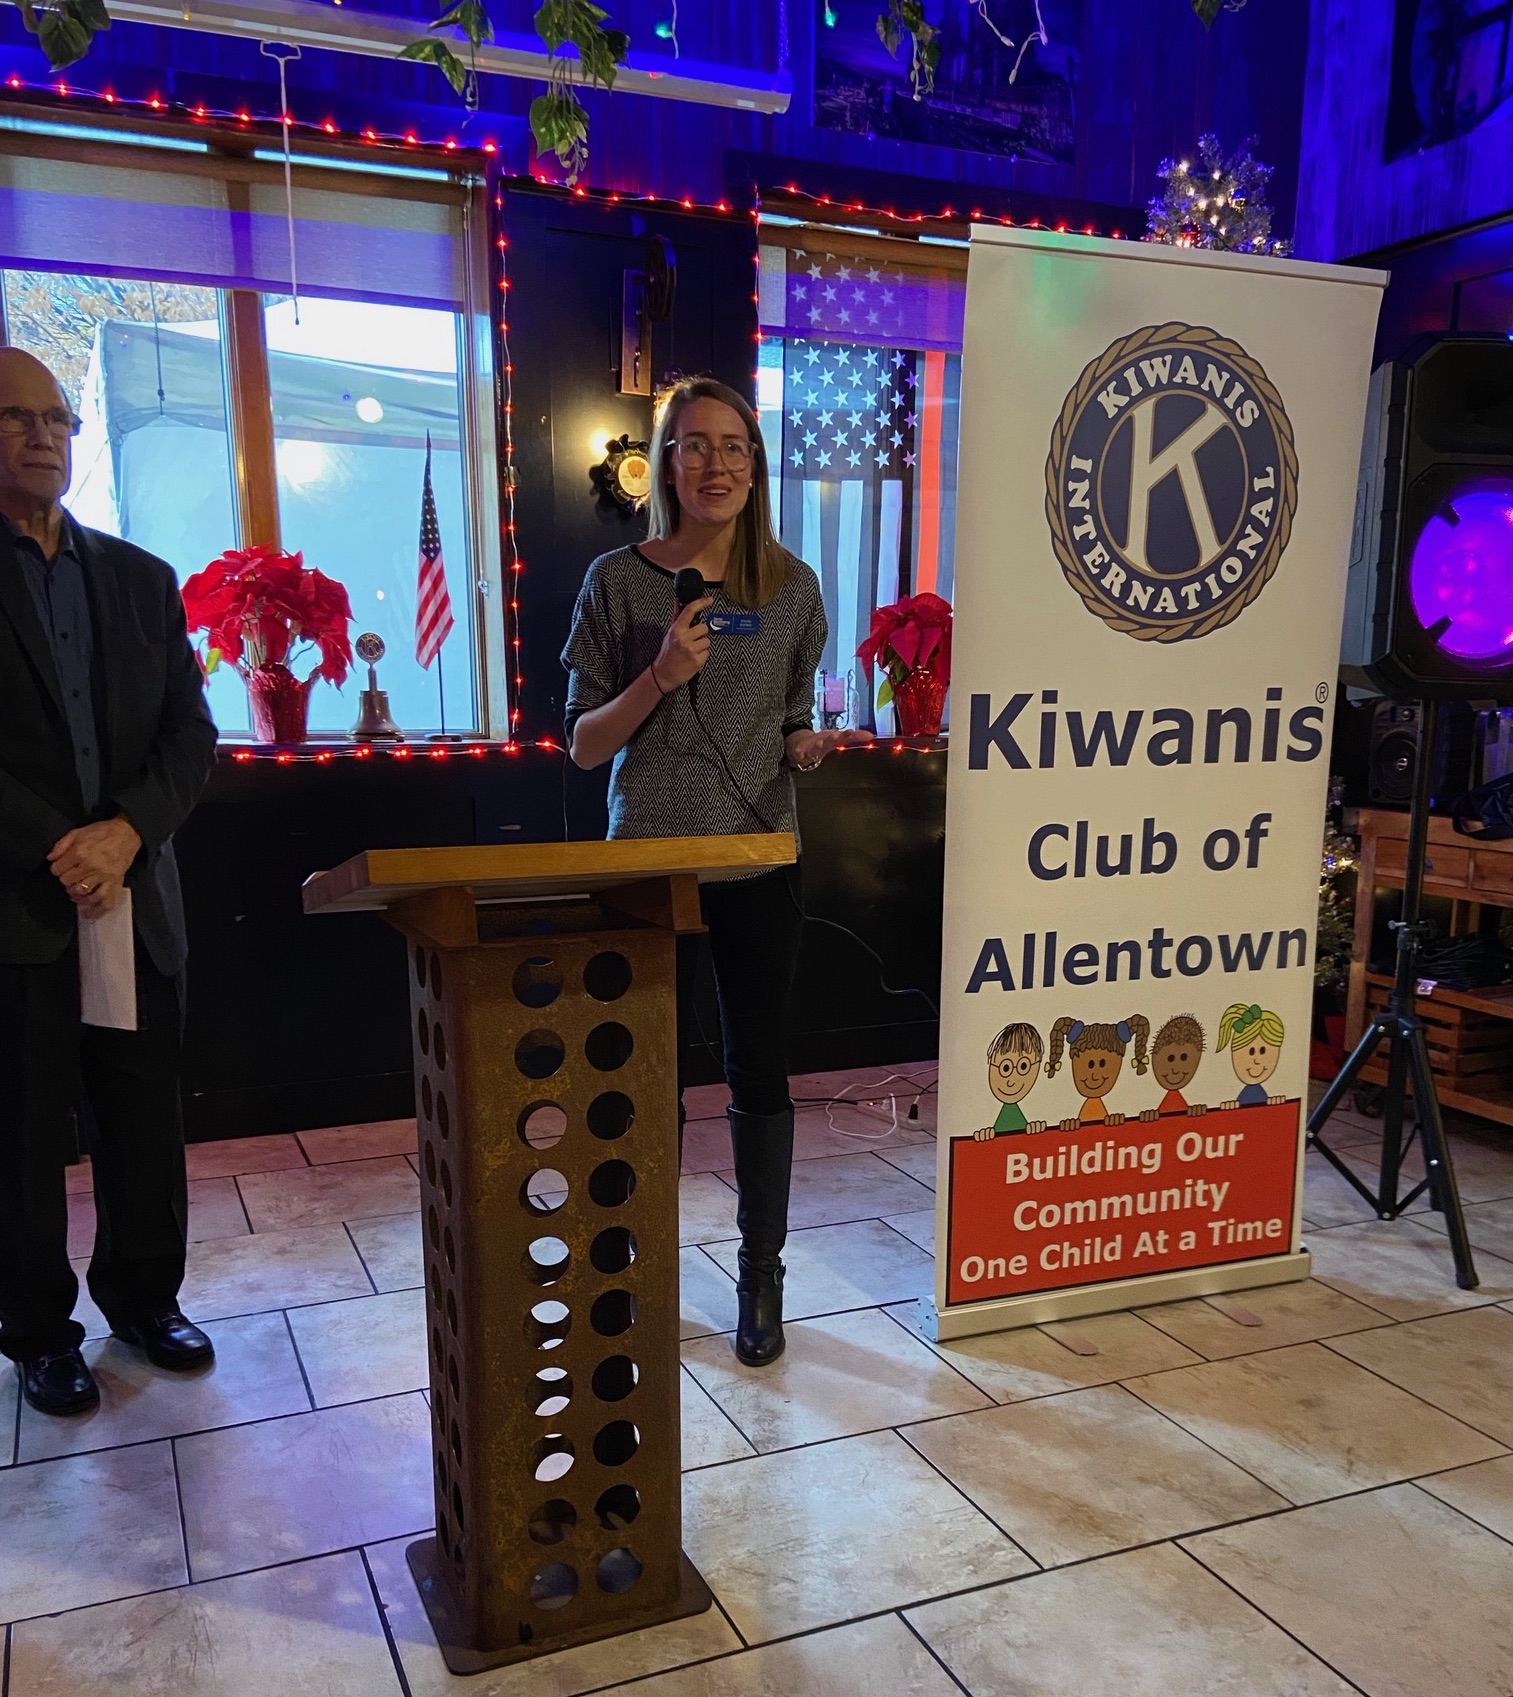 Speaker stands behind podium that reads "Kiwanis Club of Allentown"